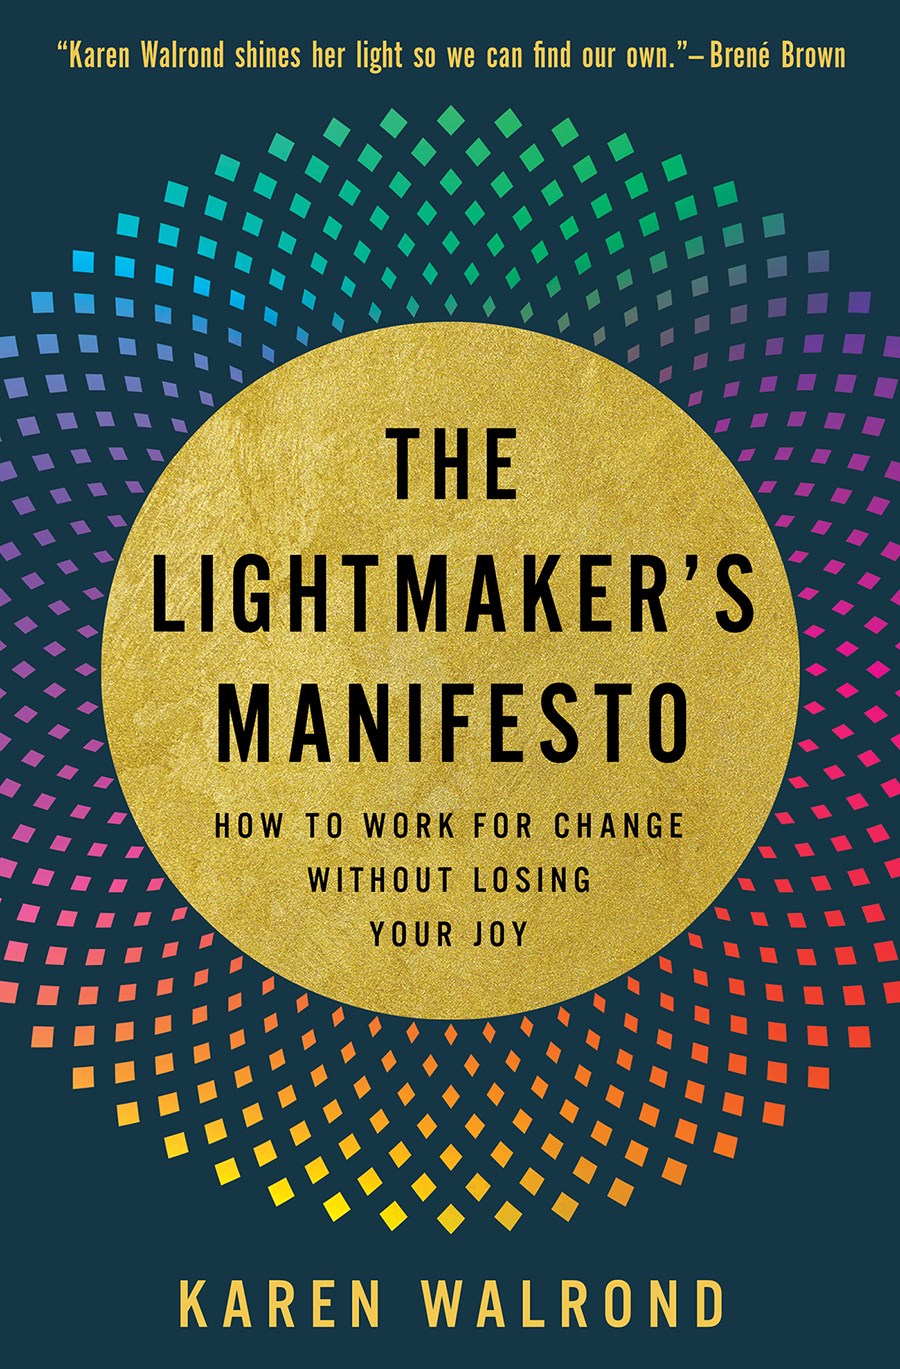 The Lightmaker's Manifesto by Karen Walrond